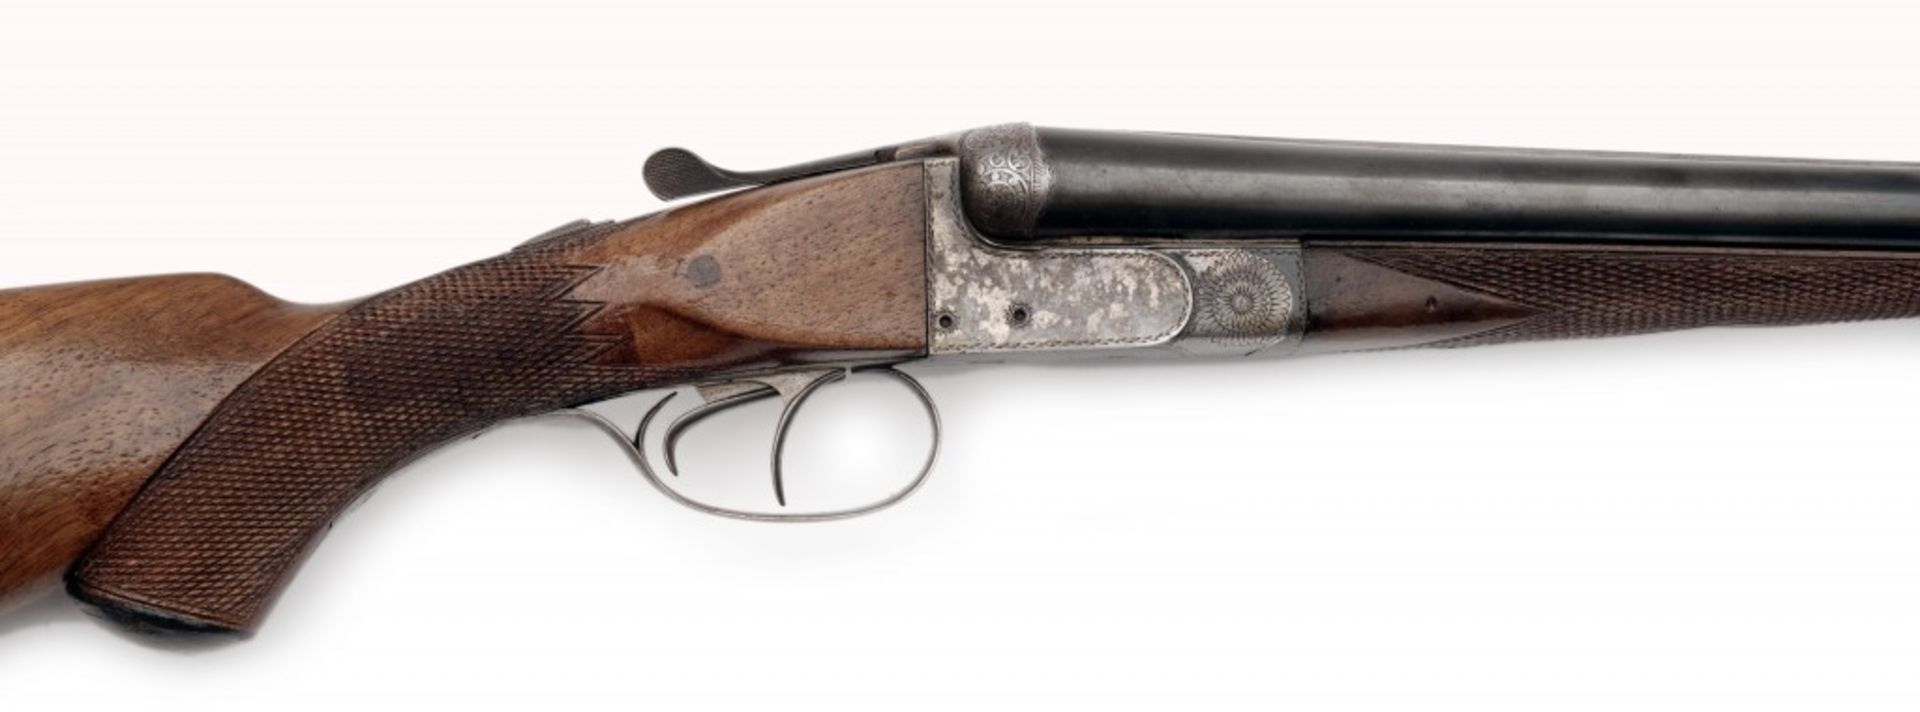 A Double-barrelled Shotgun, Ferdinand Fückert, Troppau (Opava)